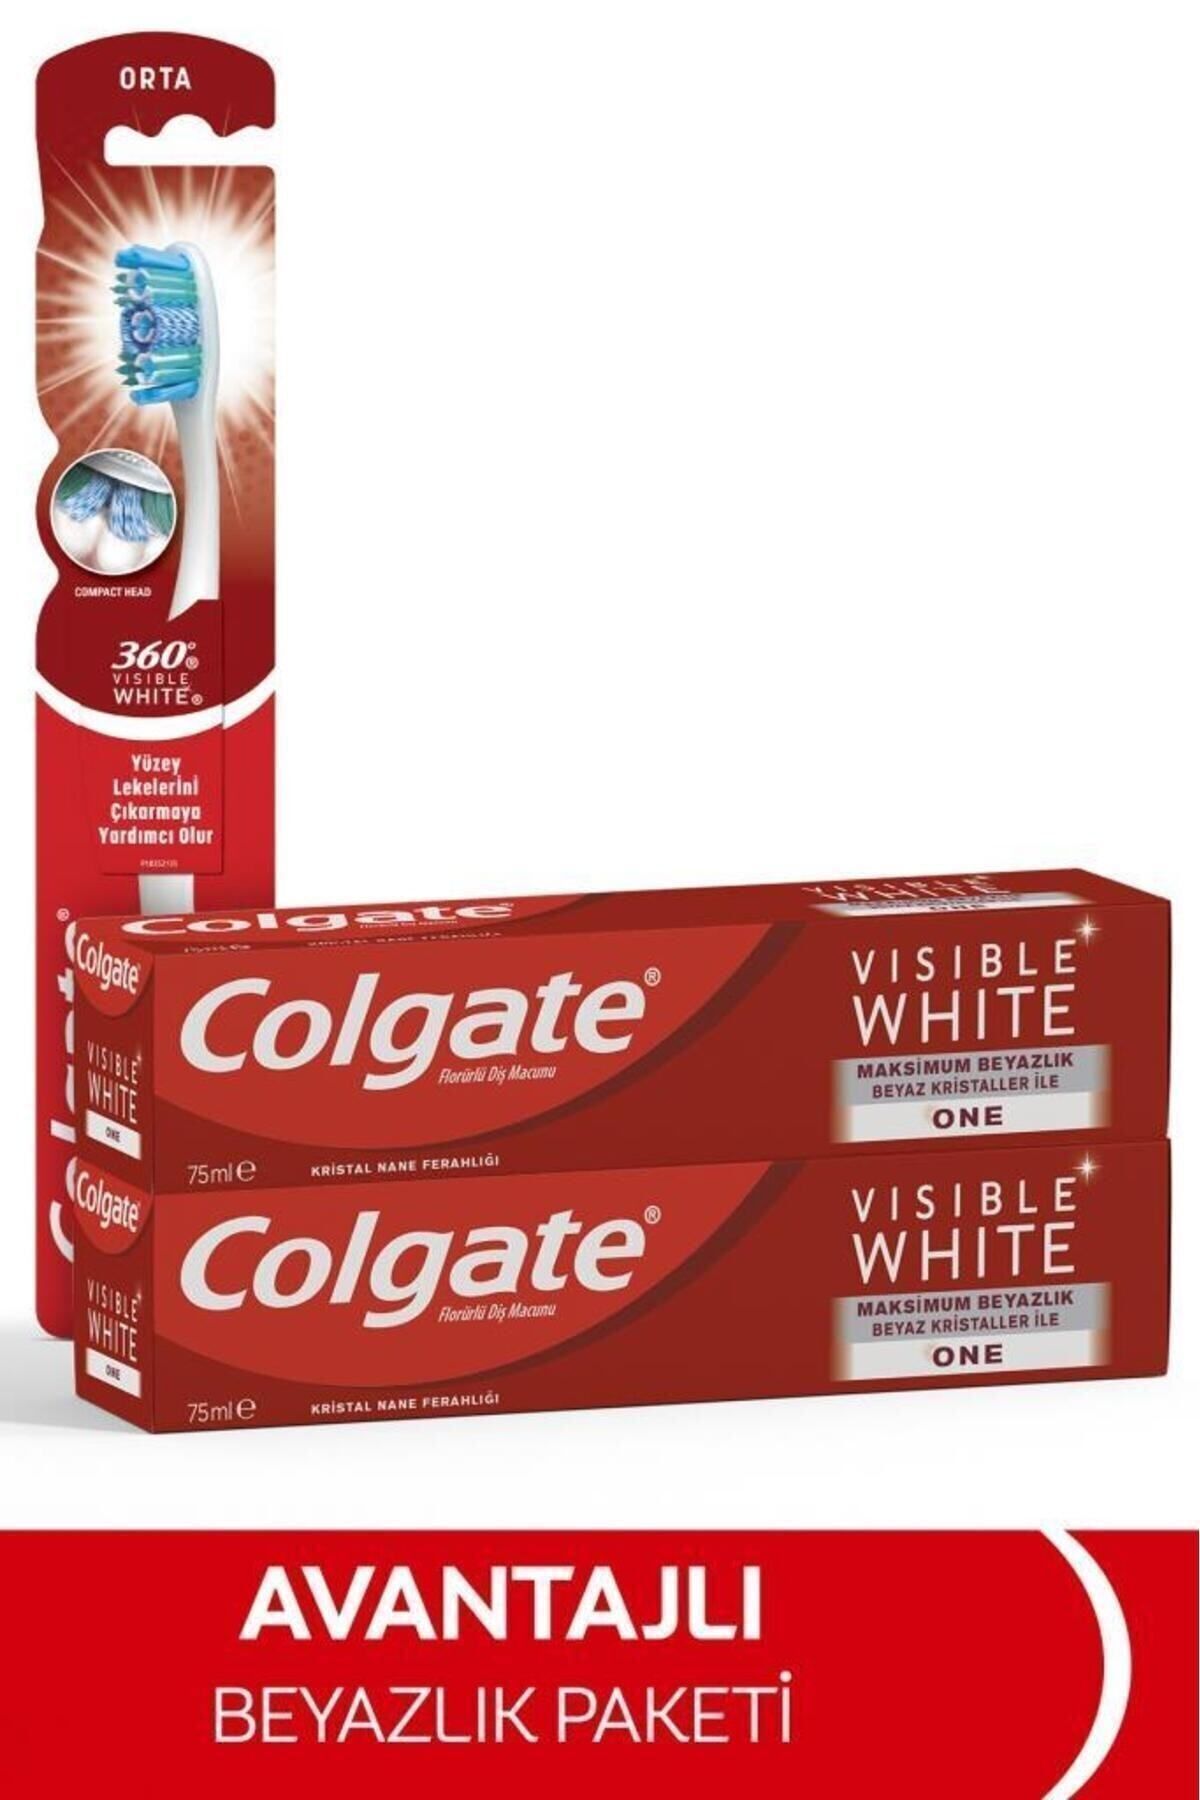 Colgate Visible White Maksimum Beyazlık Diş Macunu 75 ml X2 Adet, 360 Visible White Orta Diş Fırçası